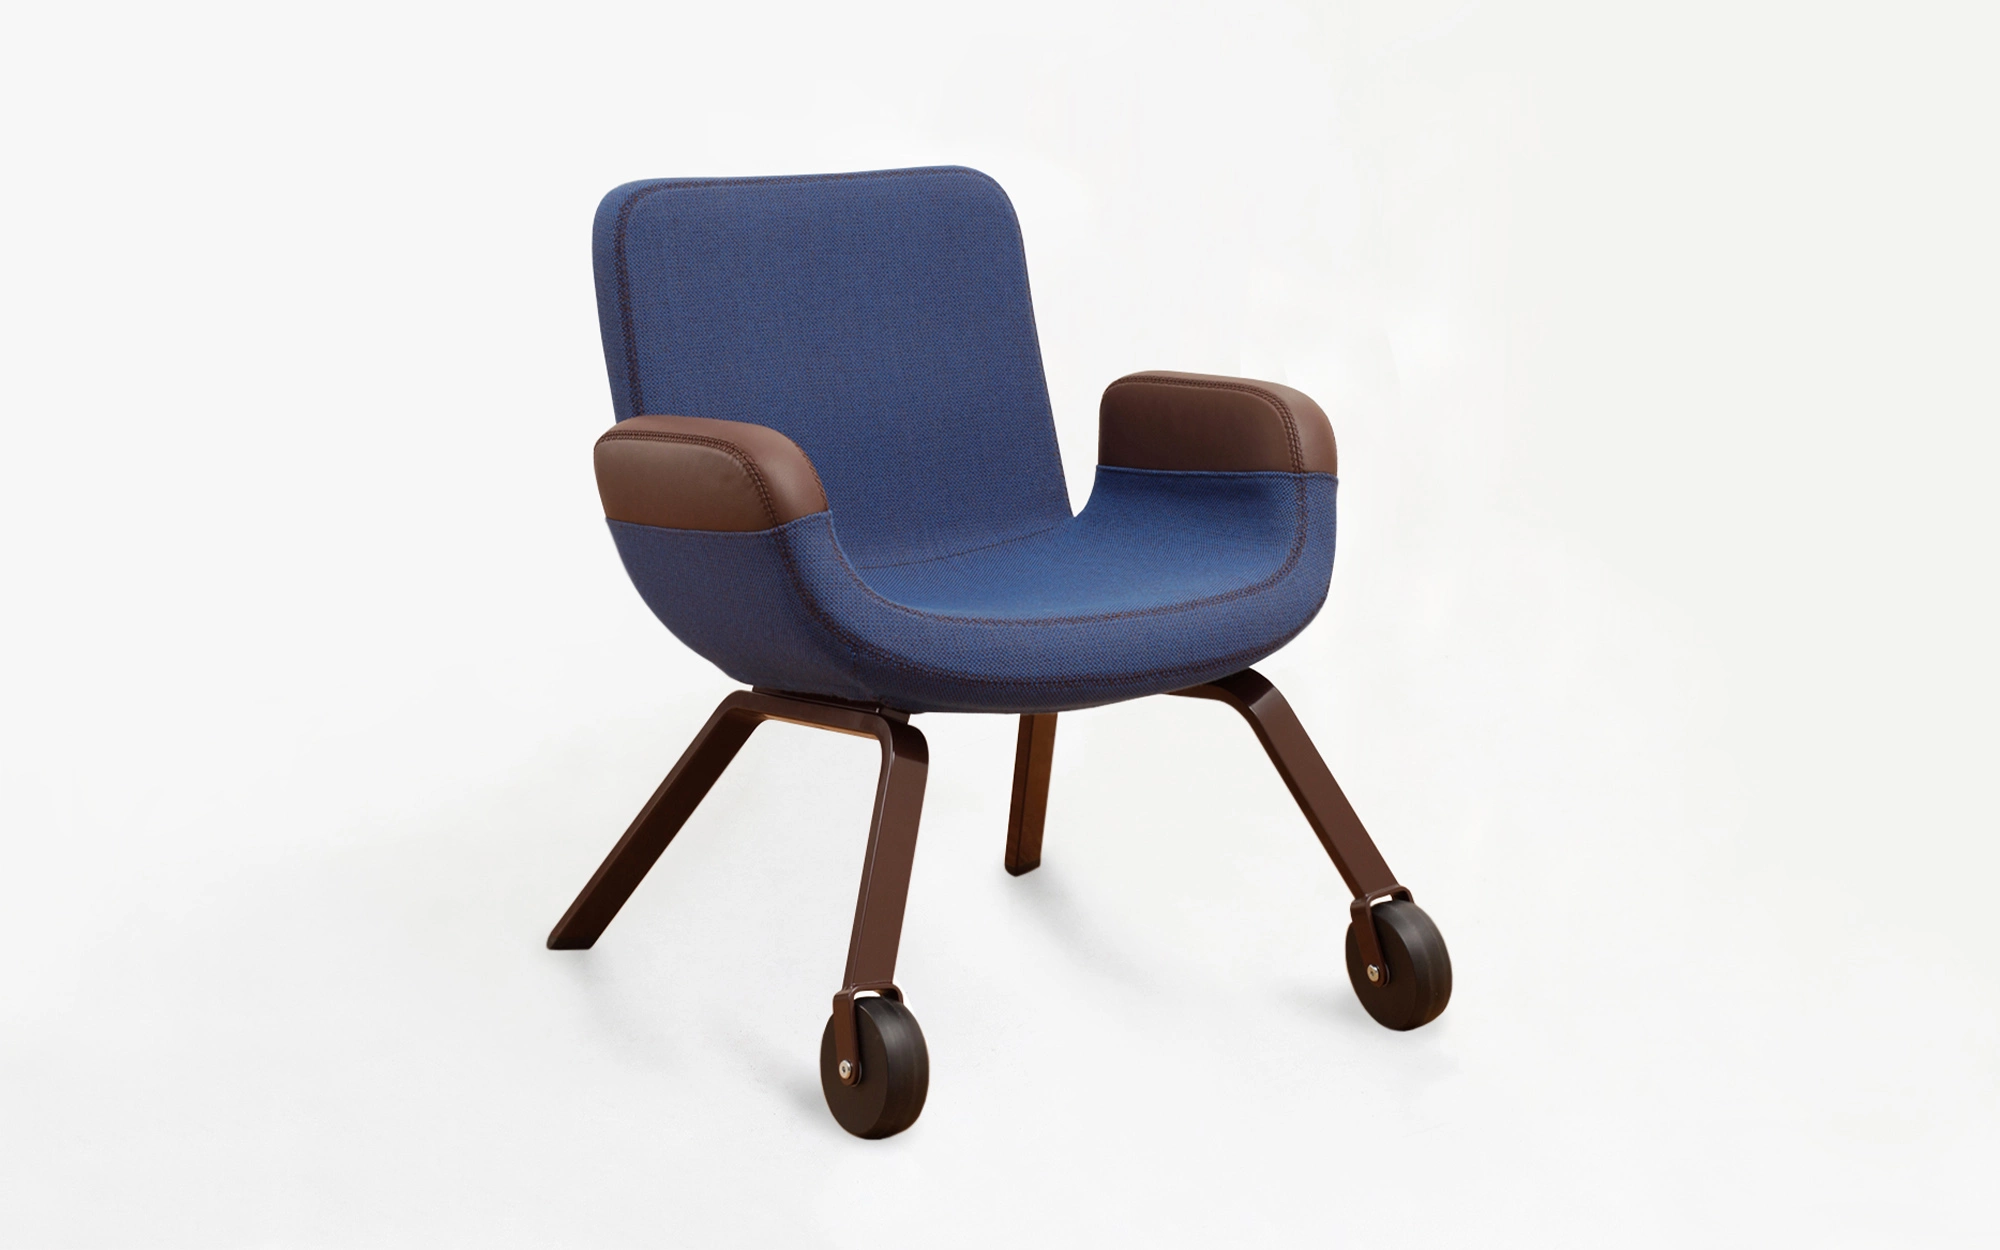 UN Lounge Chair - Hella Jongerius - TEFAF New York 2019.